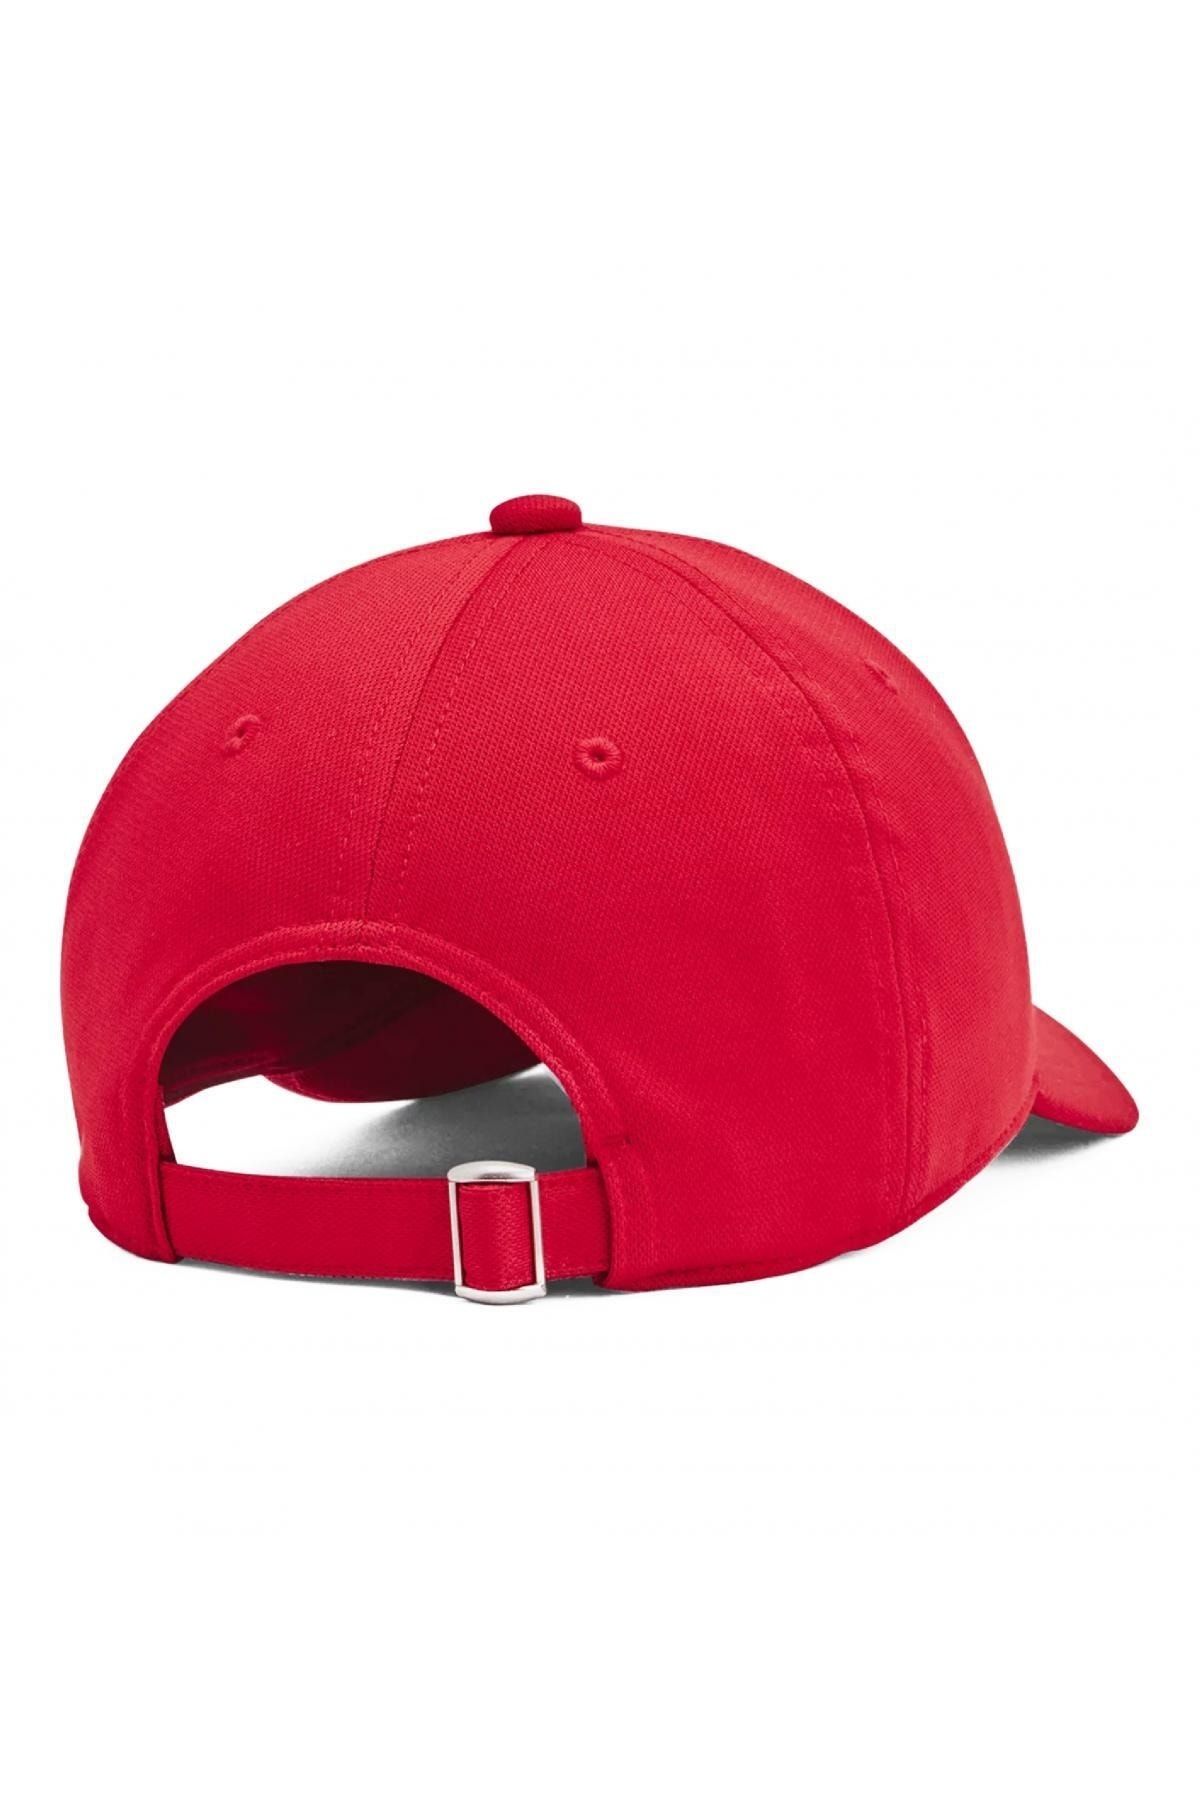 Under Armour 1376712 Ua Boy's Blitzing Adj Red Men's Hat